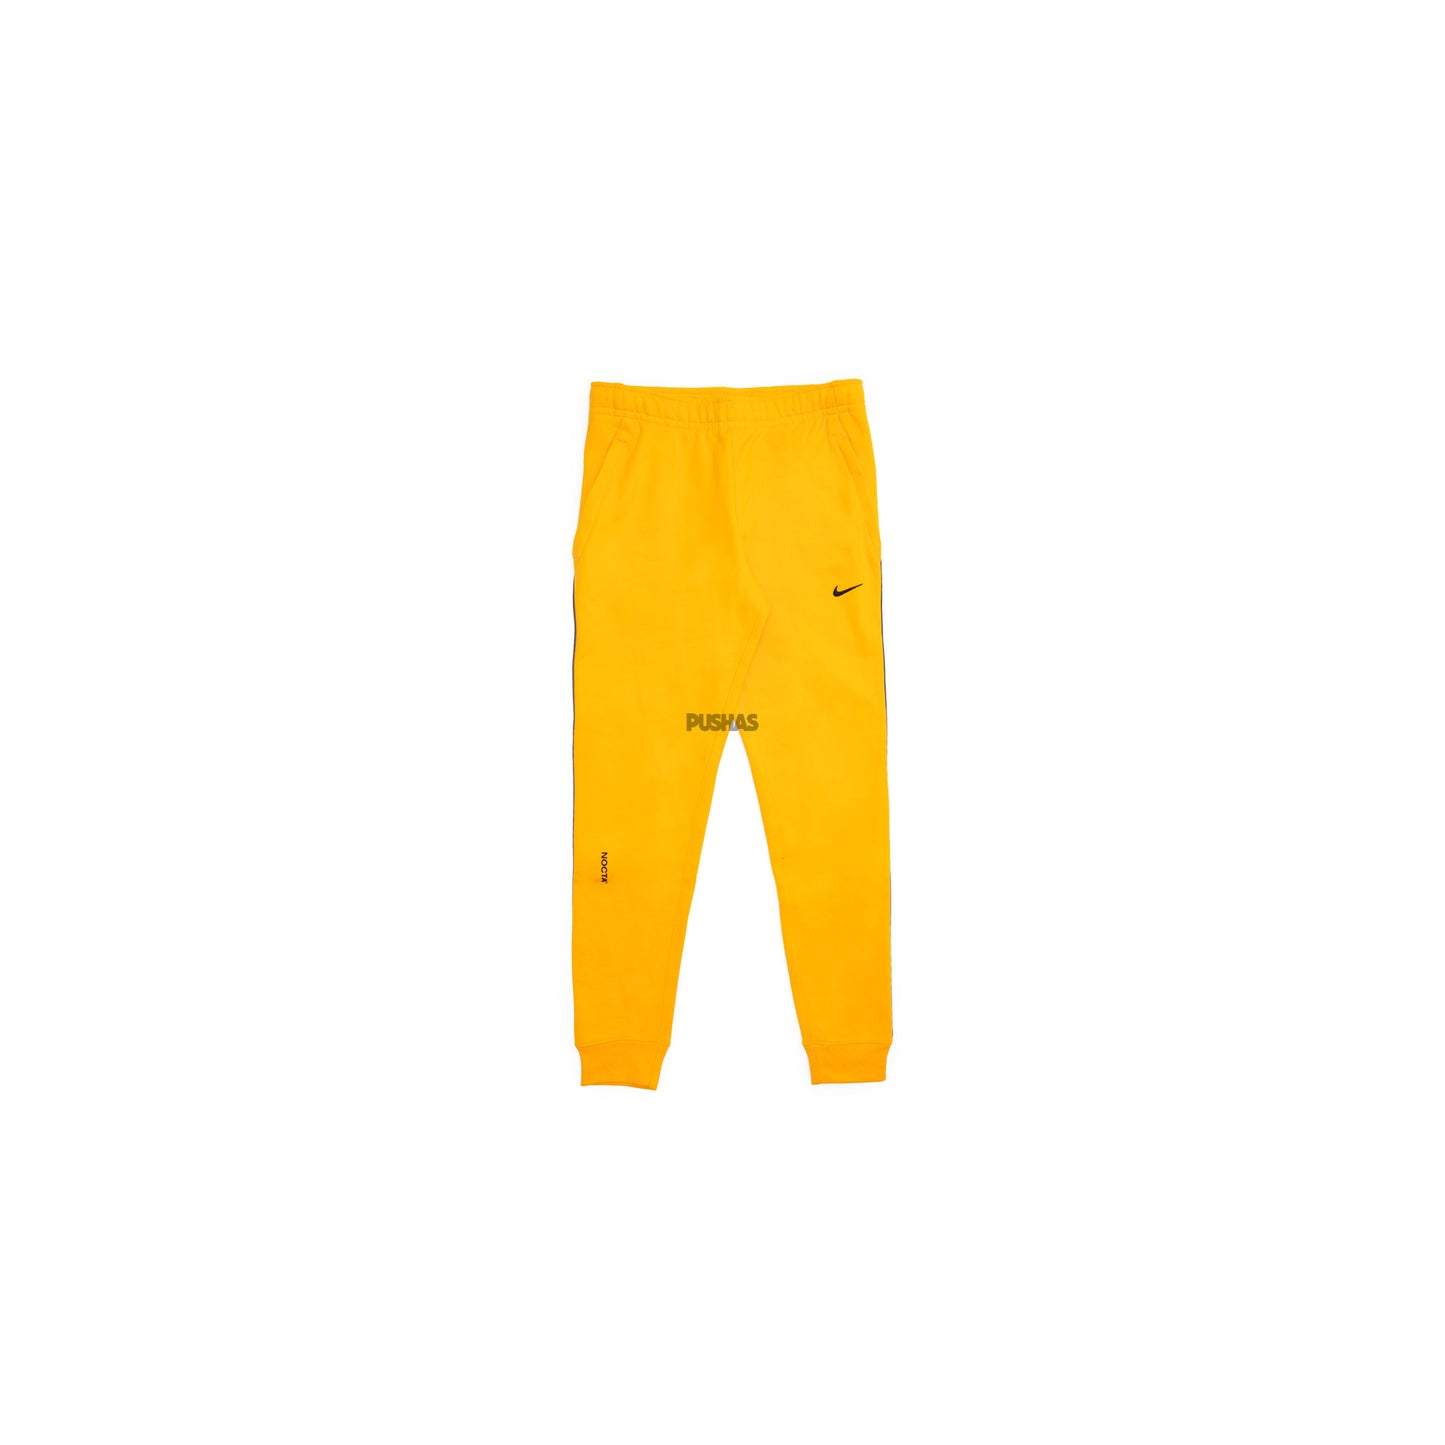 Nike-x-NOCTA-Sweatpants-Gold-Yellow-2020